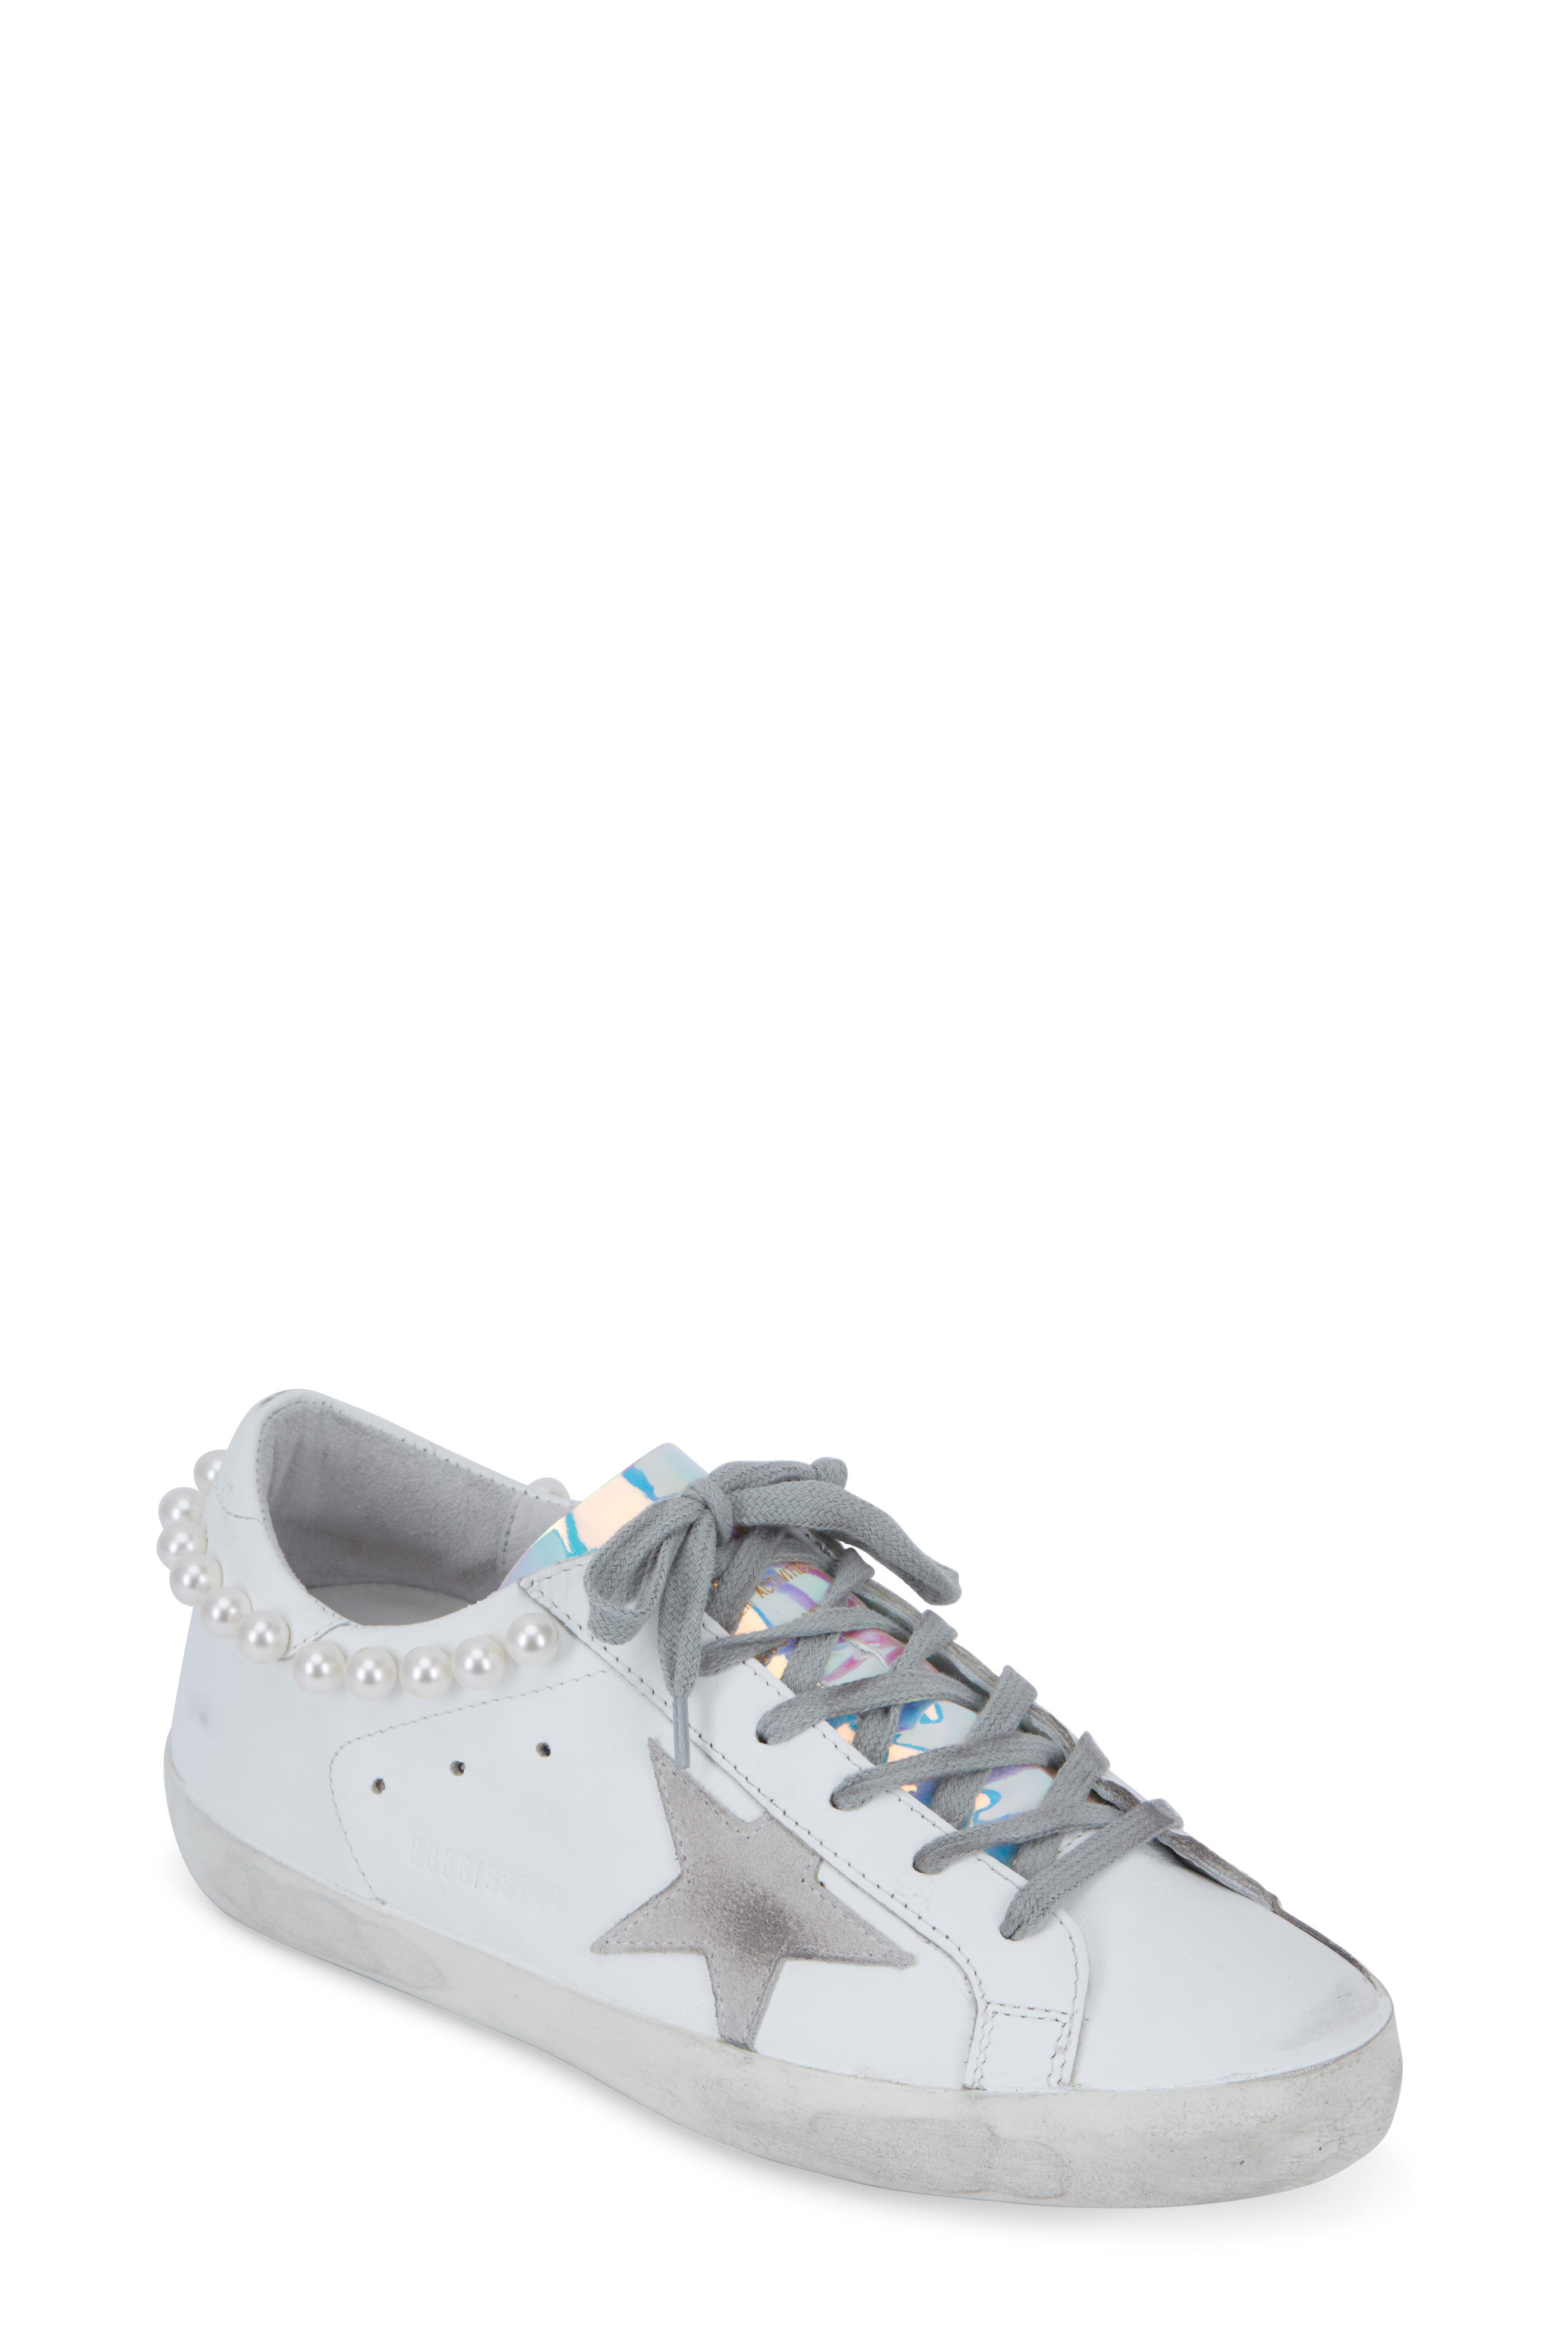 Superstar White Pearl Detail Sneaker 